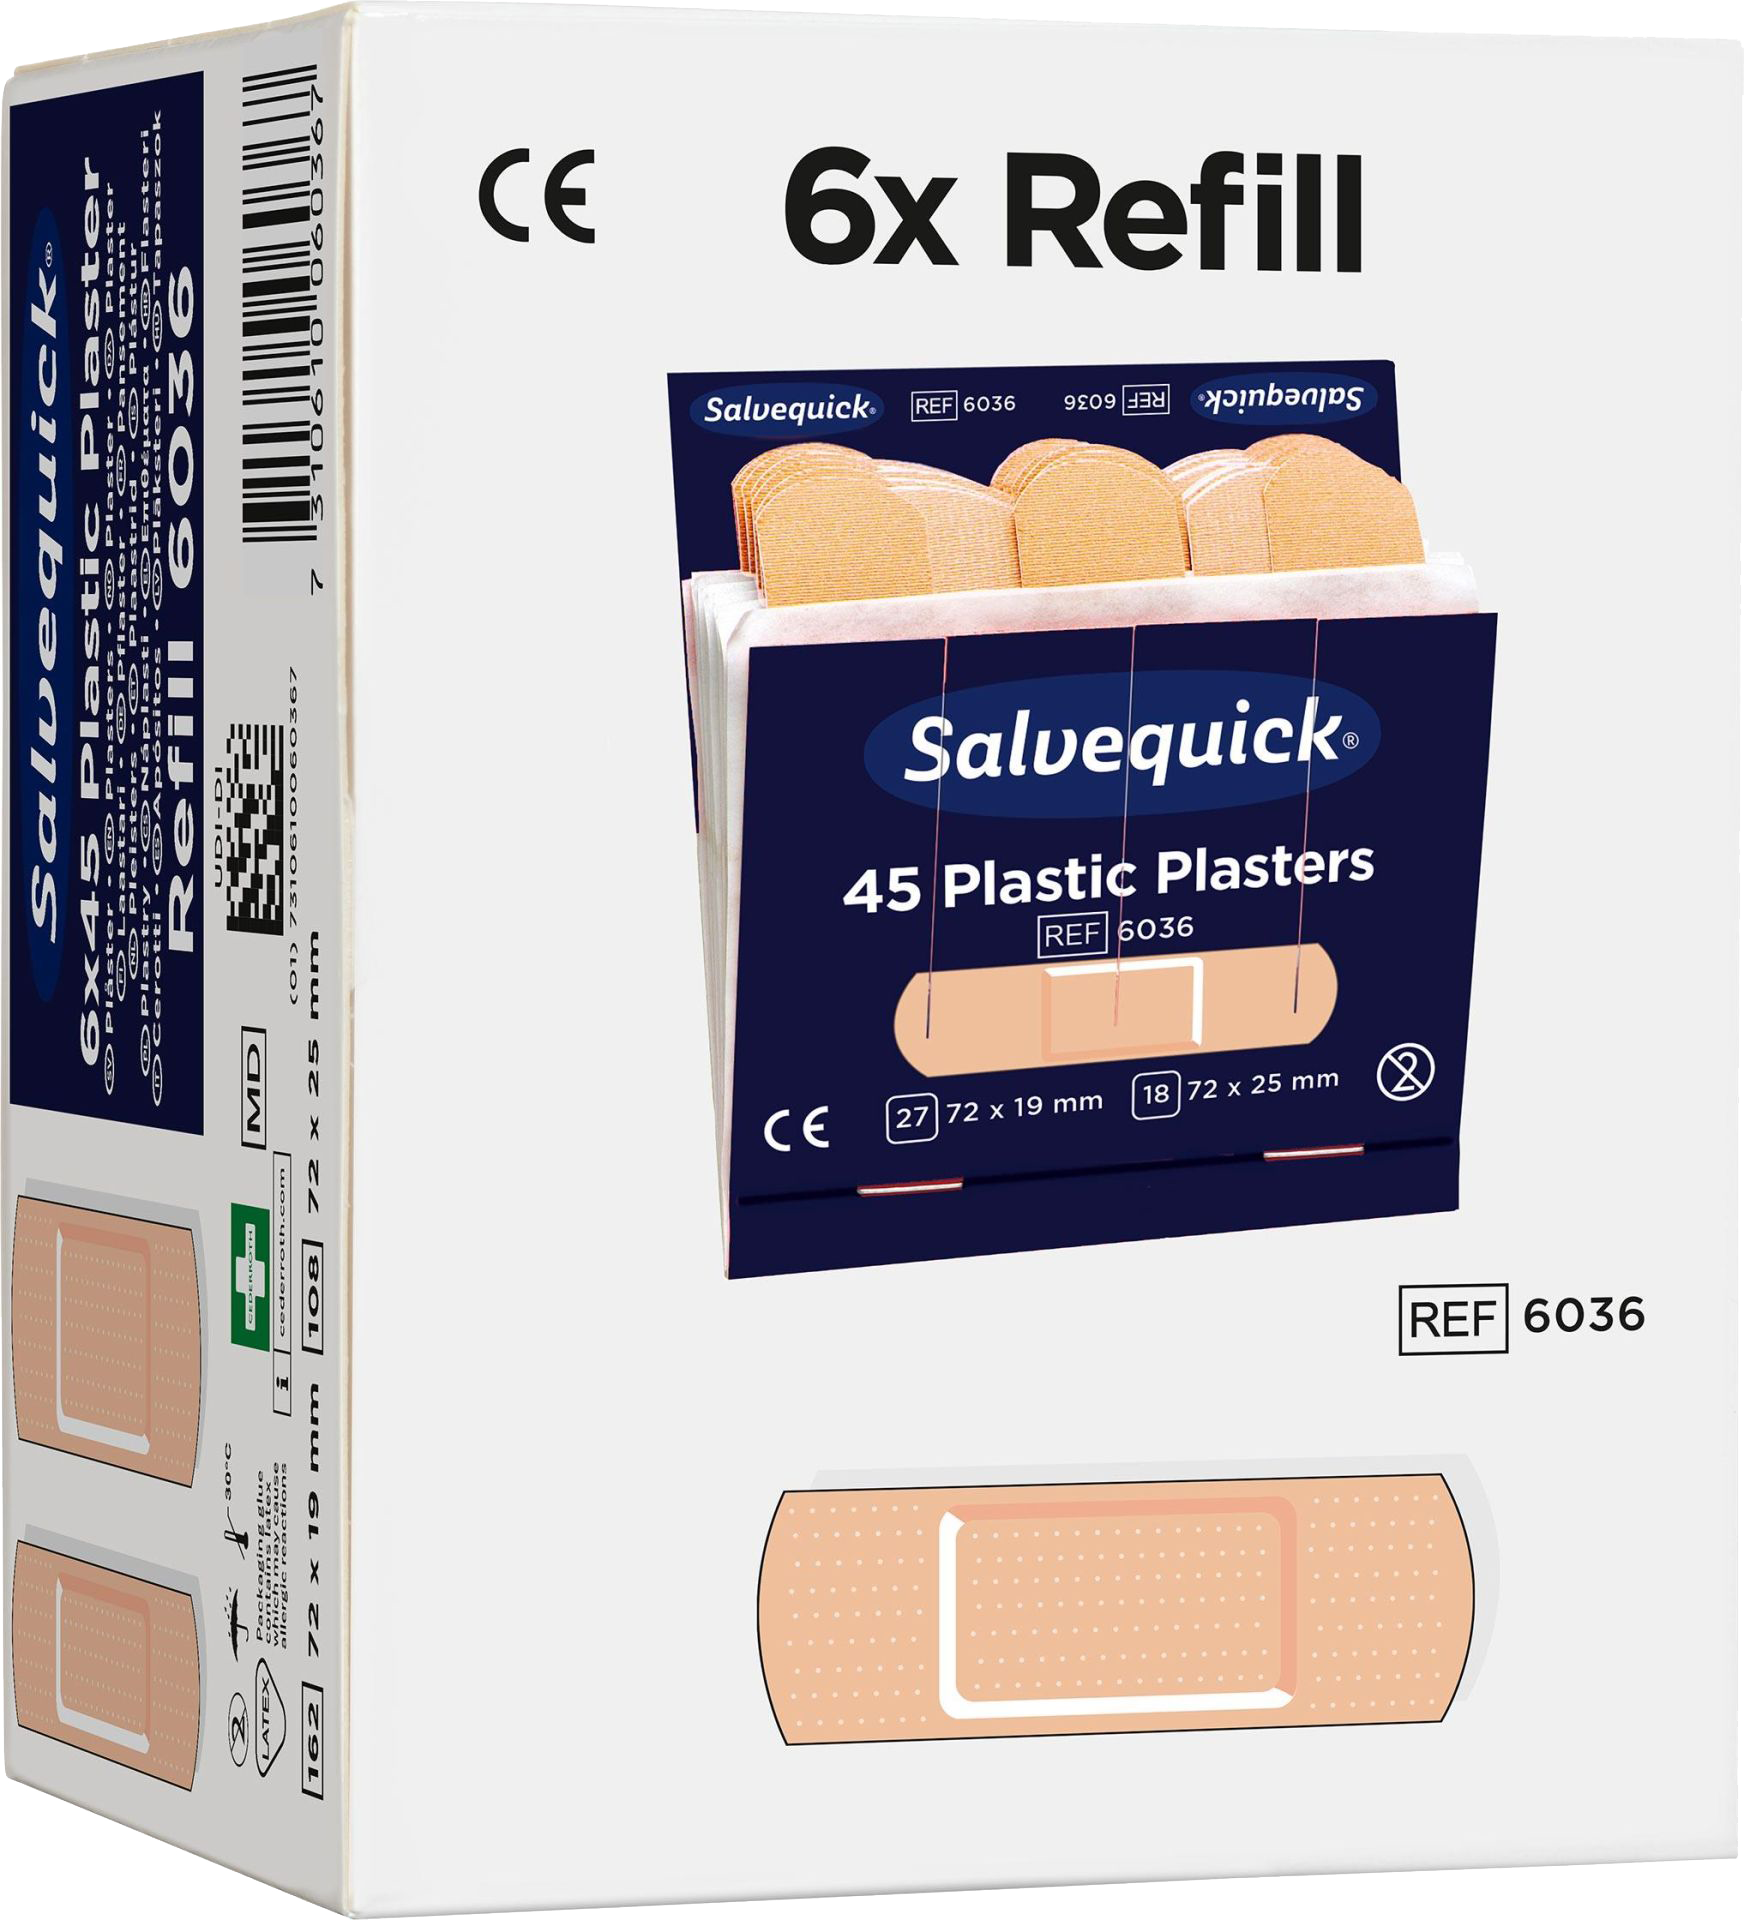 Pflaster-Refill Salvequick® 6036, Plastikpflaster, wasserabweisend, 6x 45 Pflaster